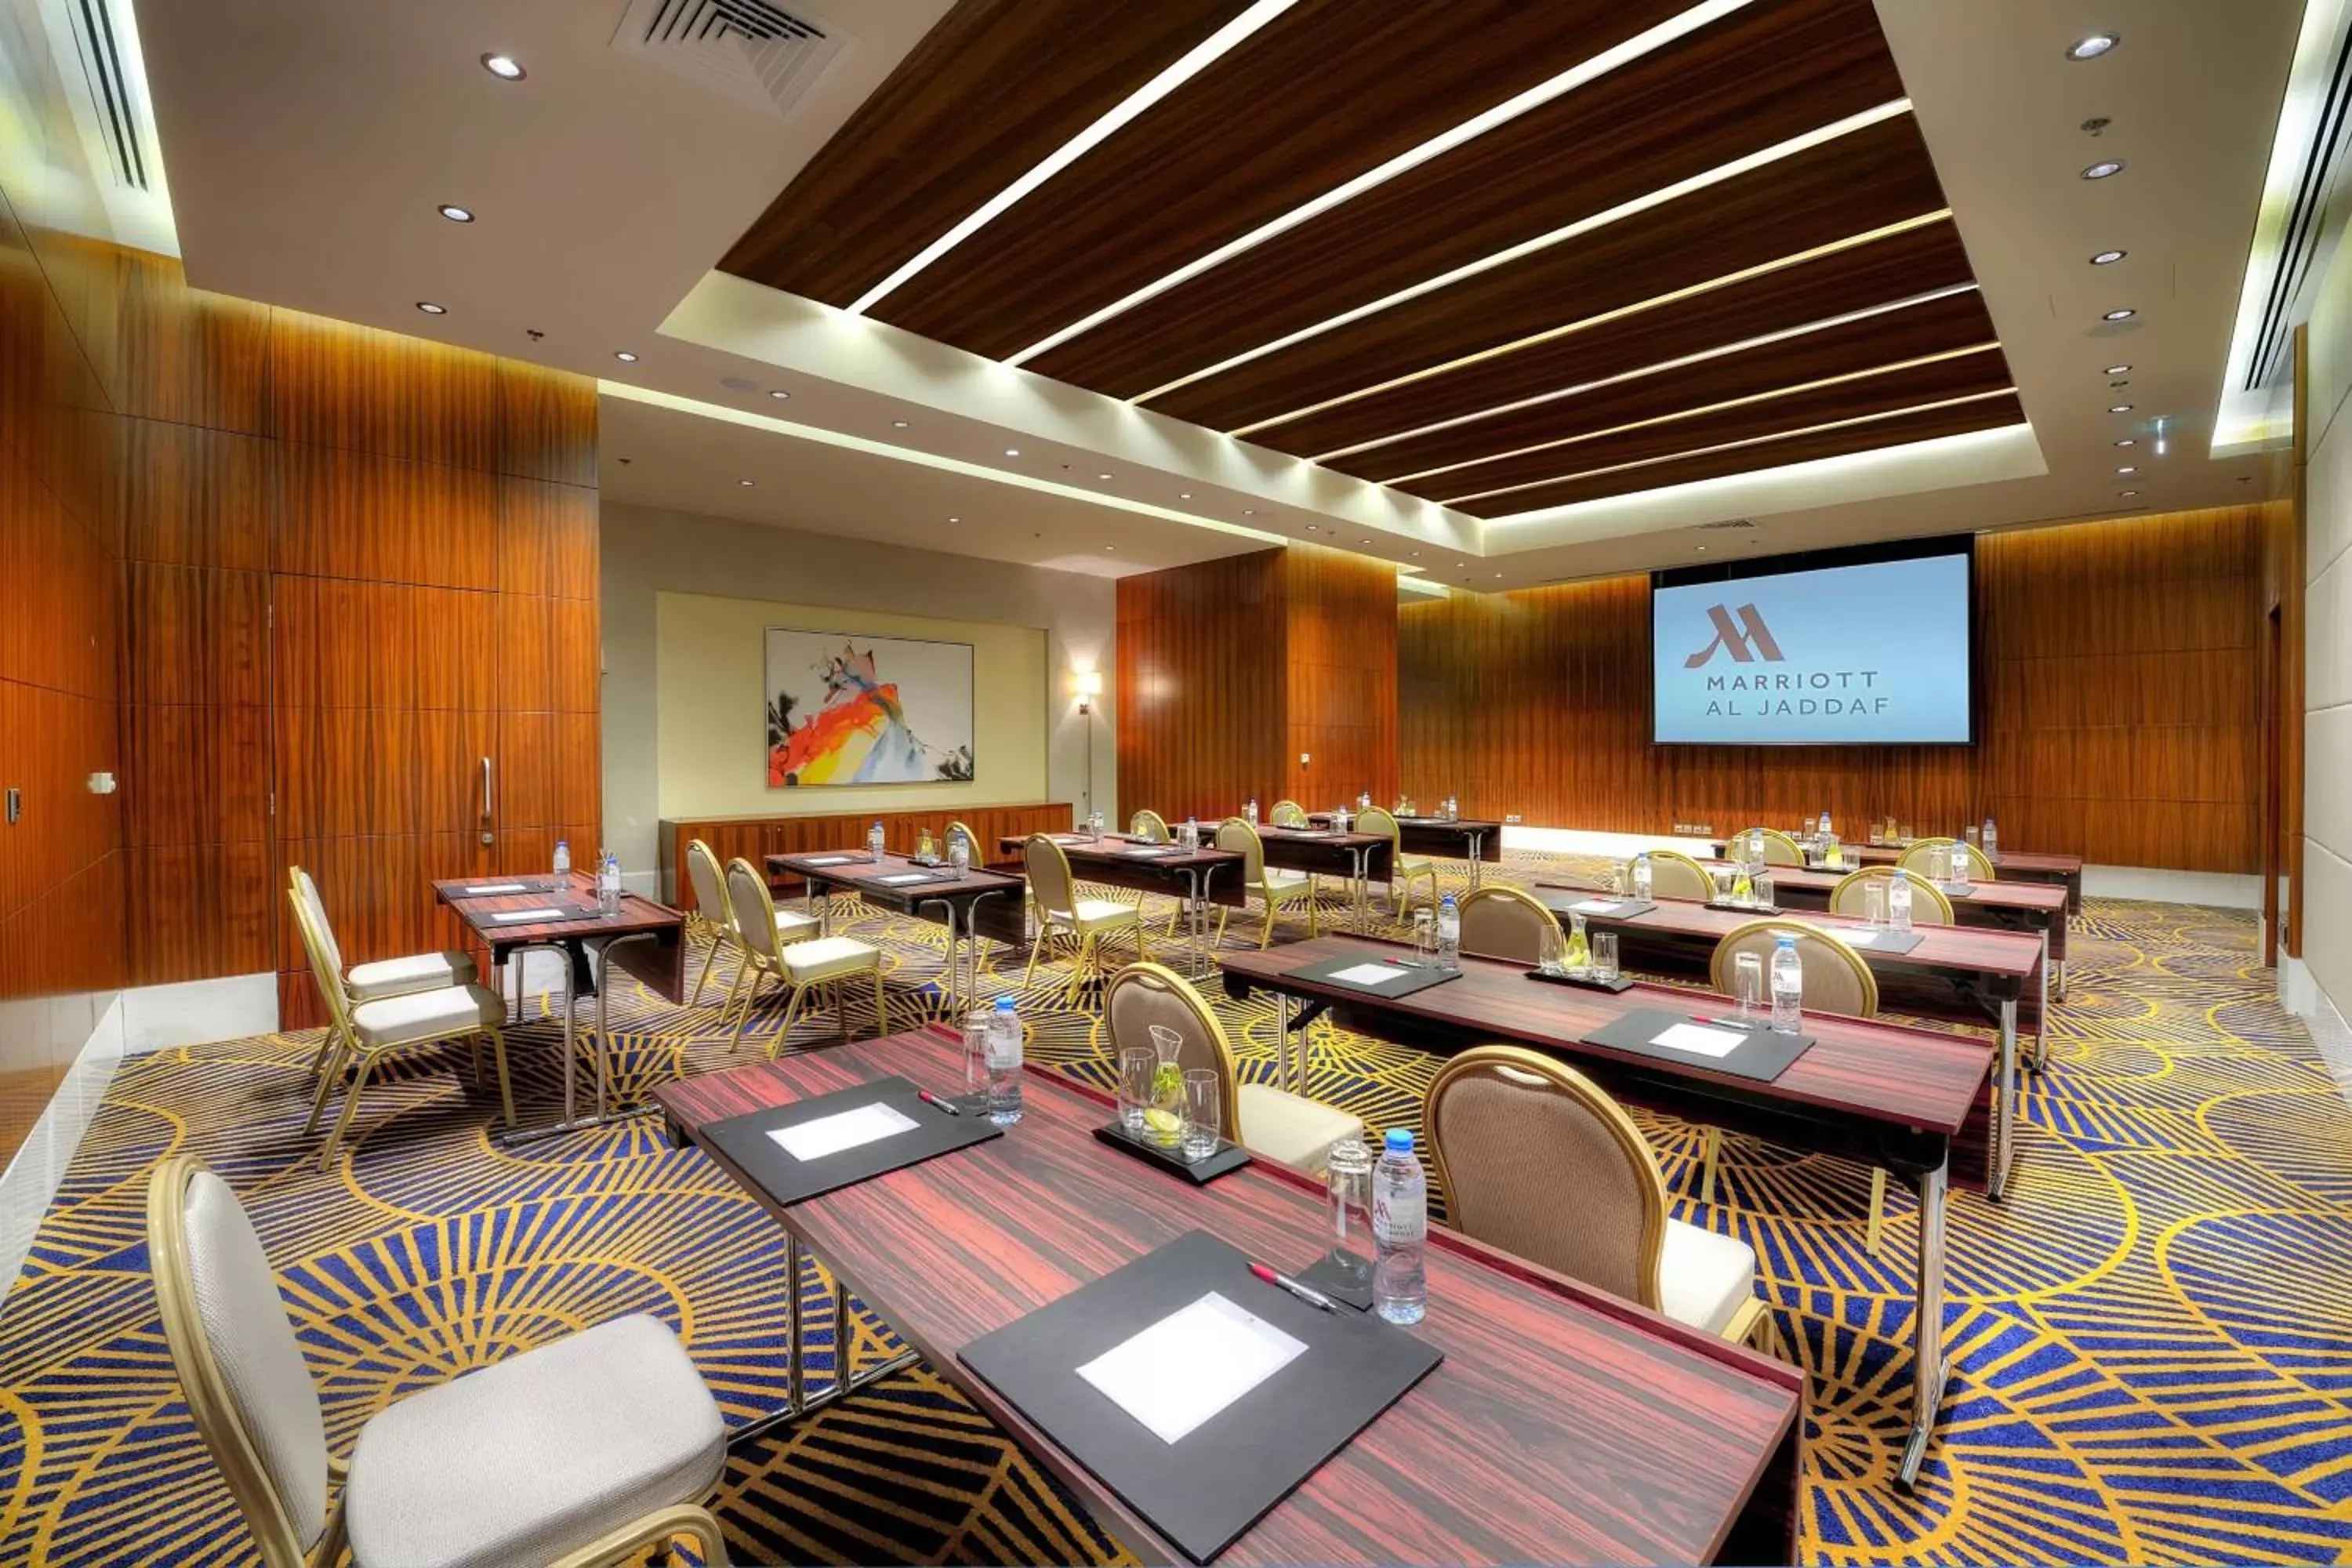 Meeting/conference room, Restaurant/Places to Eat in Marriott Hotel, Al Jaddaf, Dubai